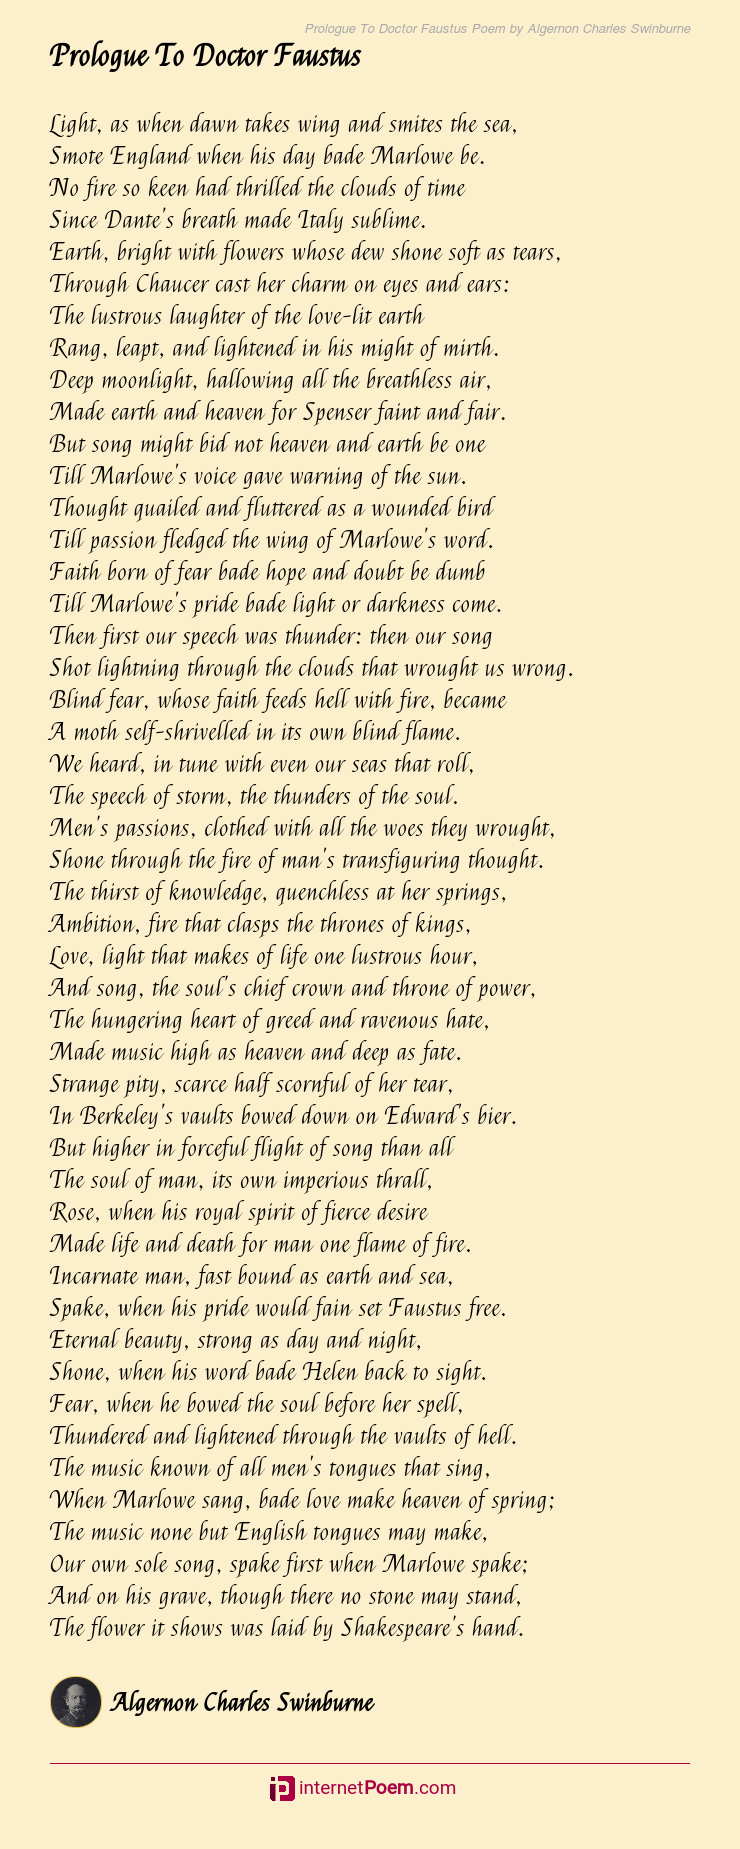 Prologue To Doctor Faustus Poem by Algernon Charles Swinburne